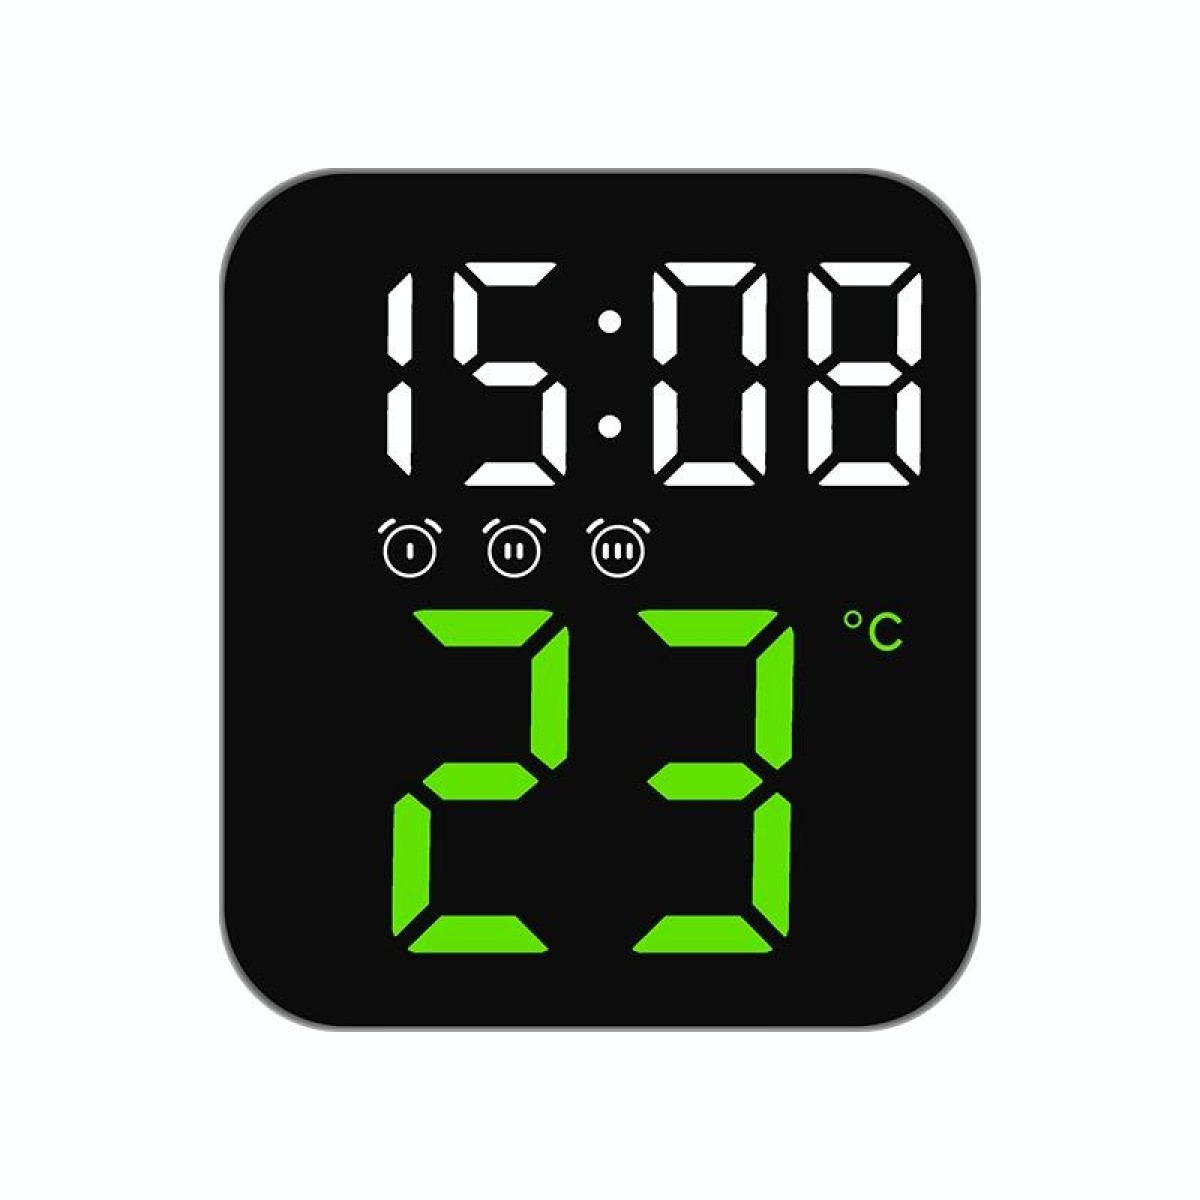 Simple Temperature Display Clock Three Alarm Clock Porch Wall Clock(Green Light)